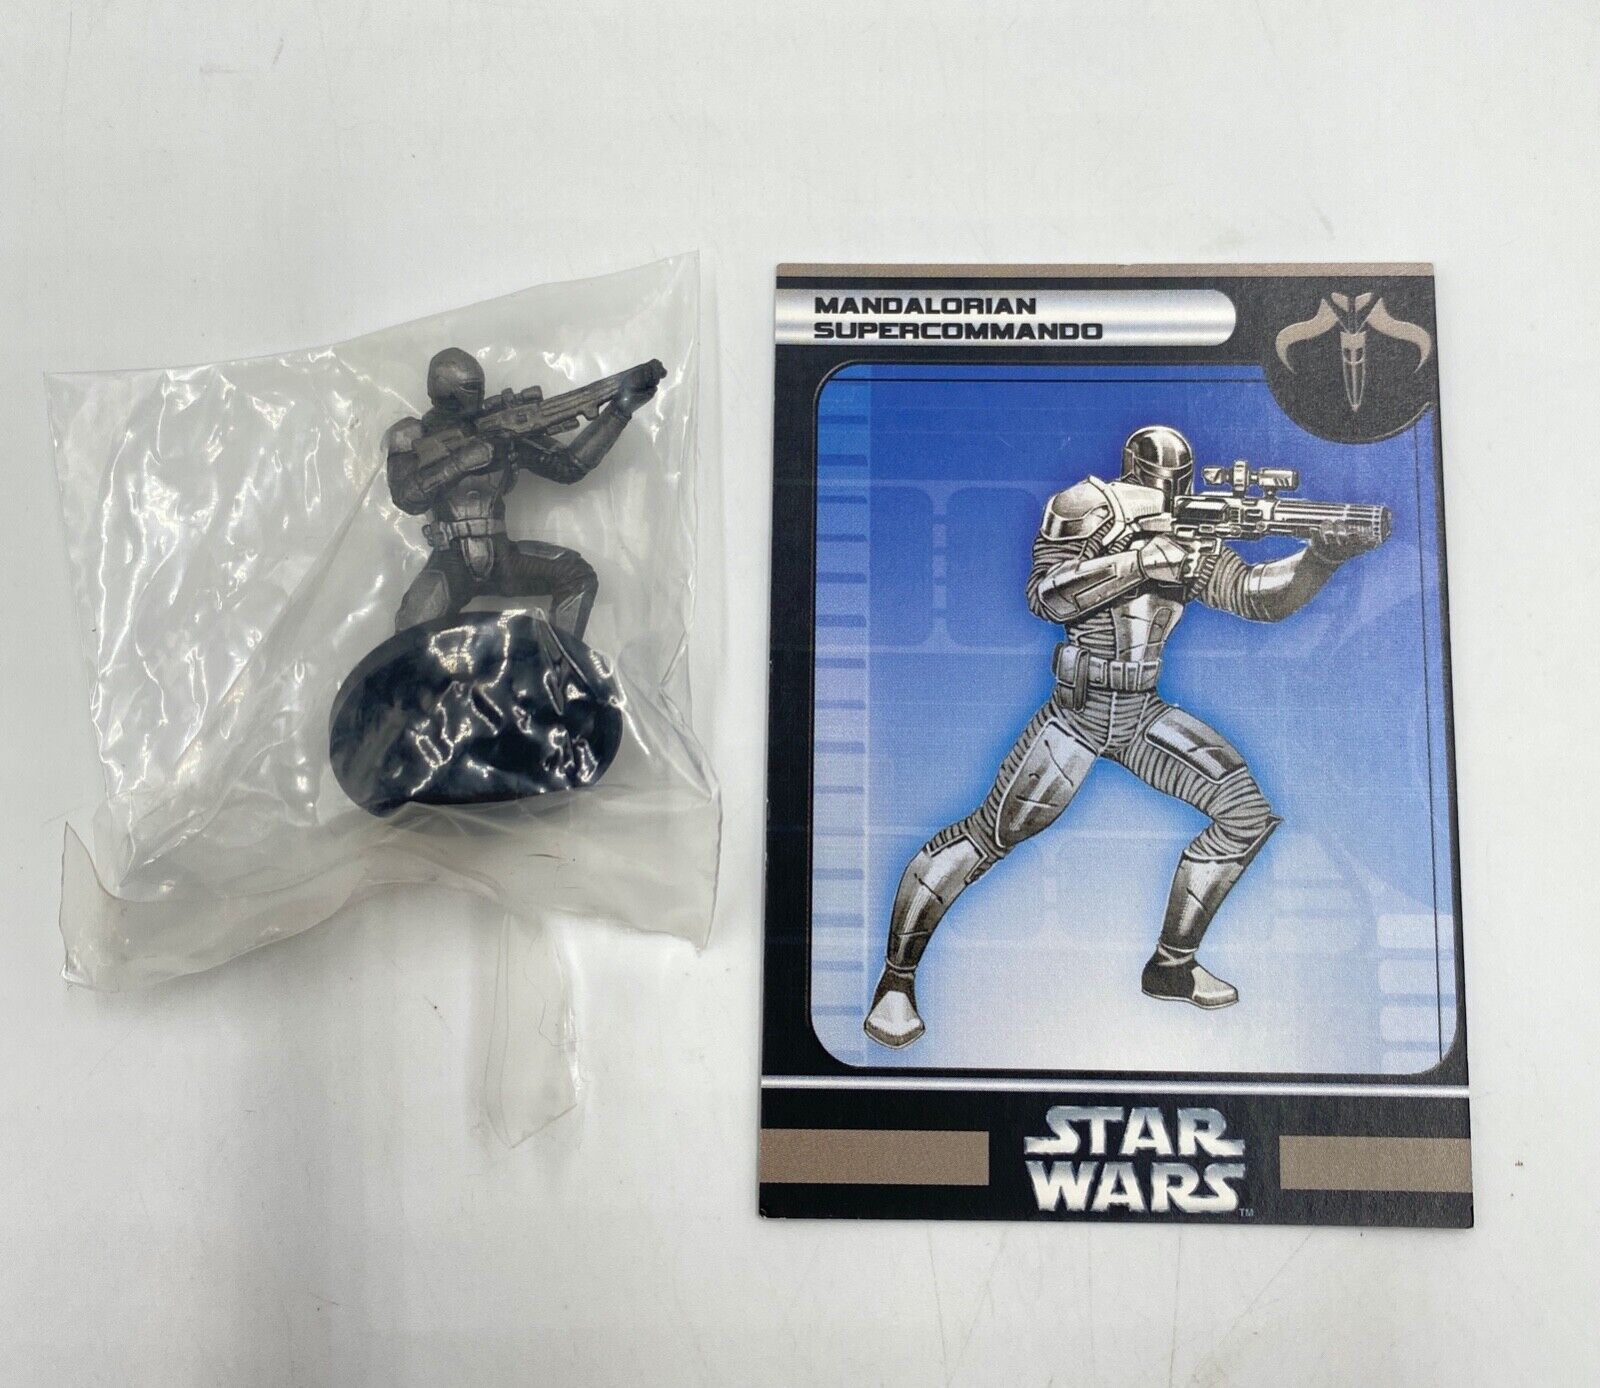 NEW/SEALED - Star Wars Miniatures - Mandalorian Supercommando #59 KOTOR w/ Card